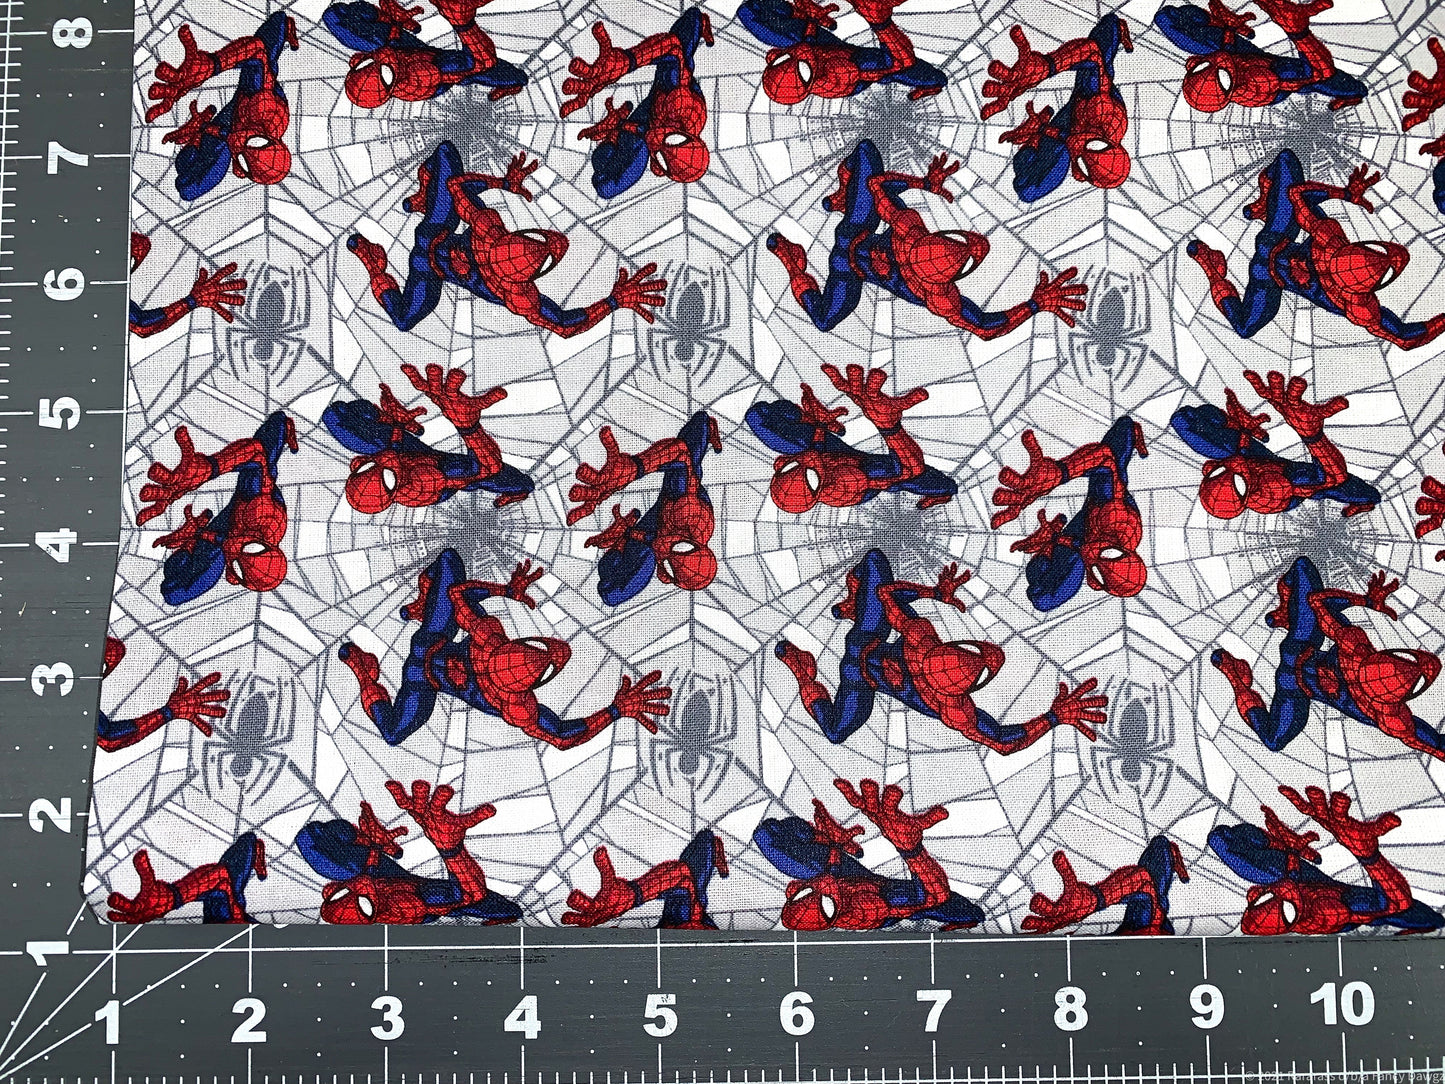 Web Crawler Spiderman fabric 73252 Spiderman